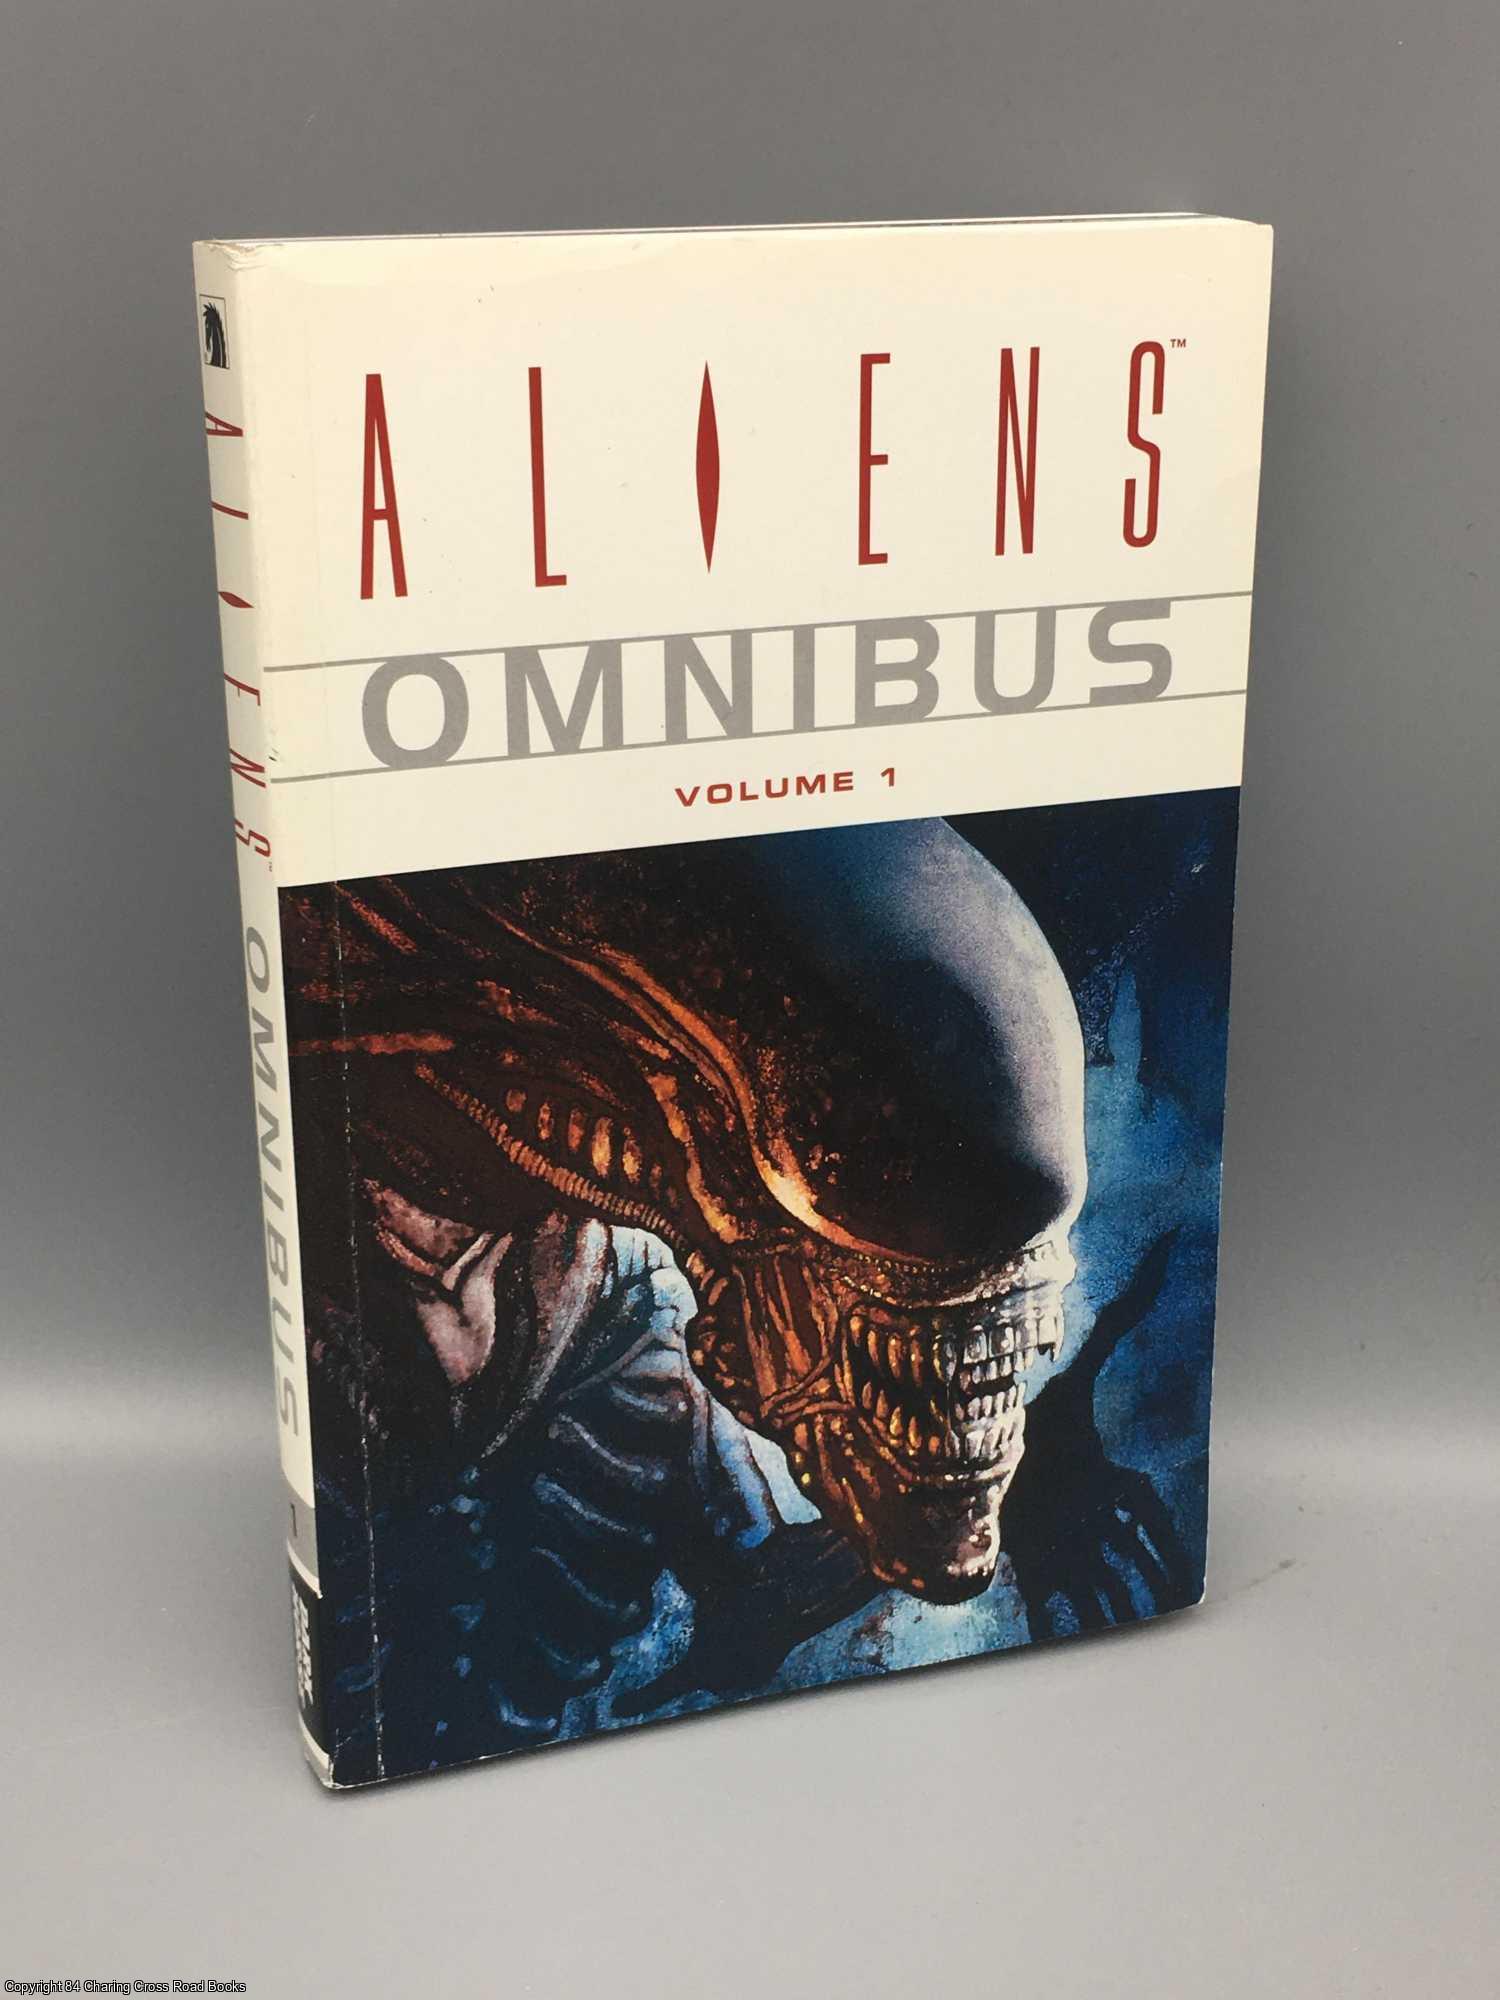 Verheiden, Mark - Aliens Omnibus Volume 1